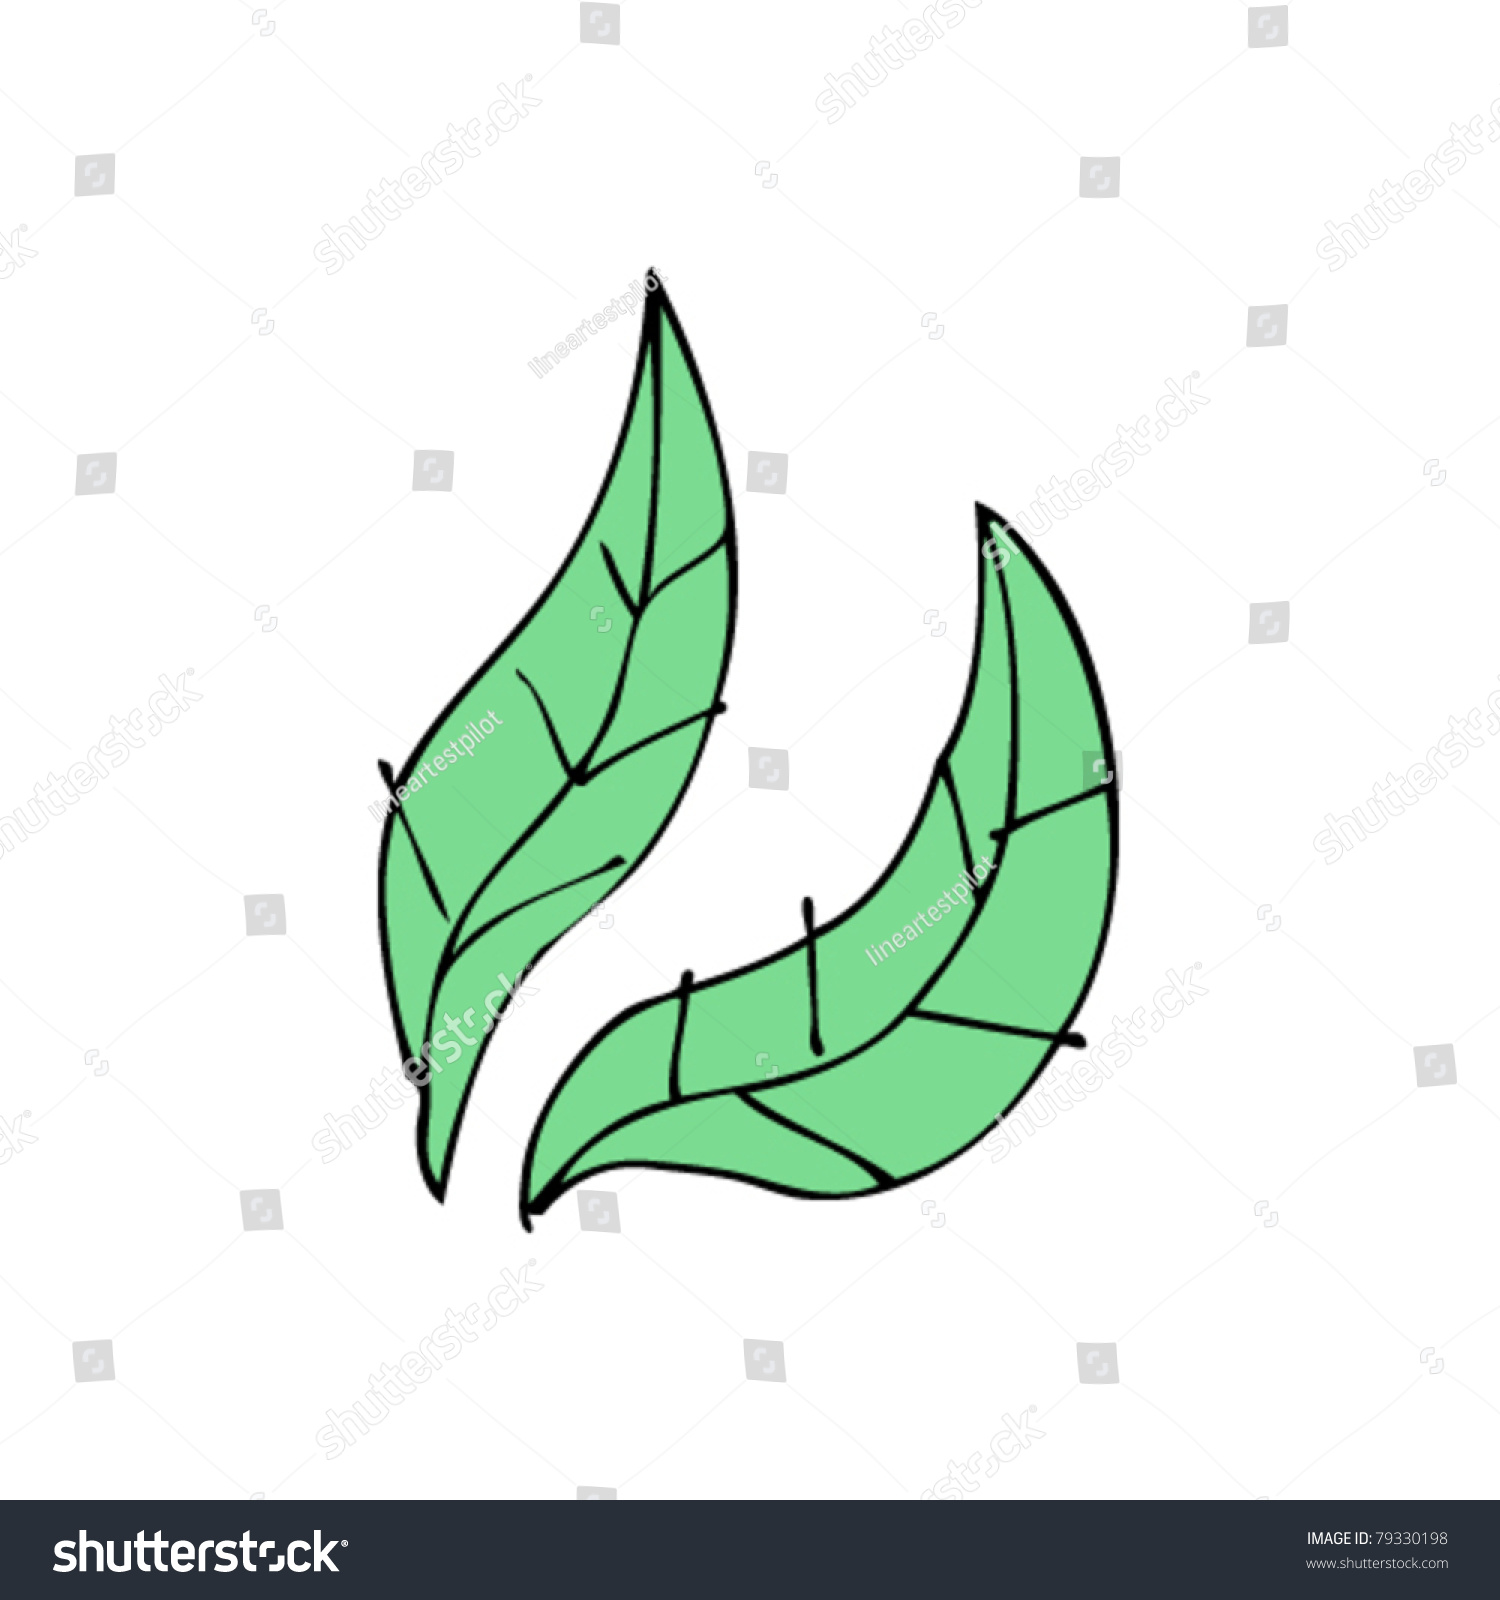 Simple Leaves Cartoon Stock Vector Illustration 79330198 : Shutterstock